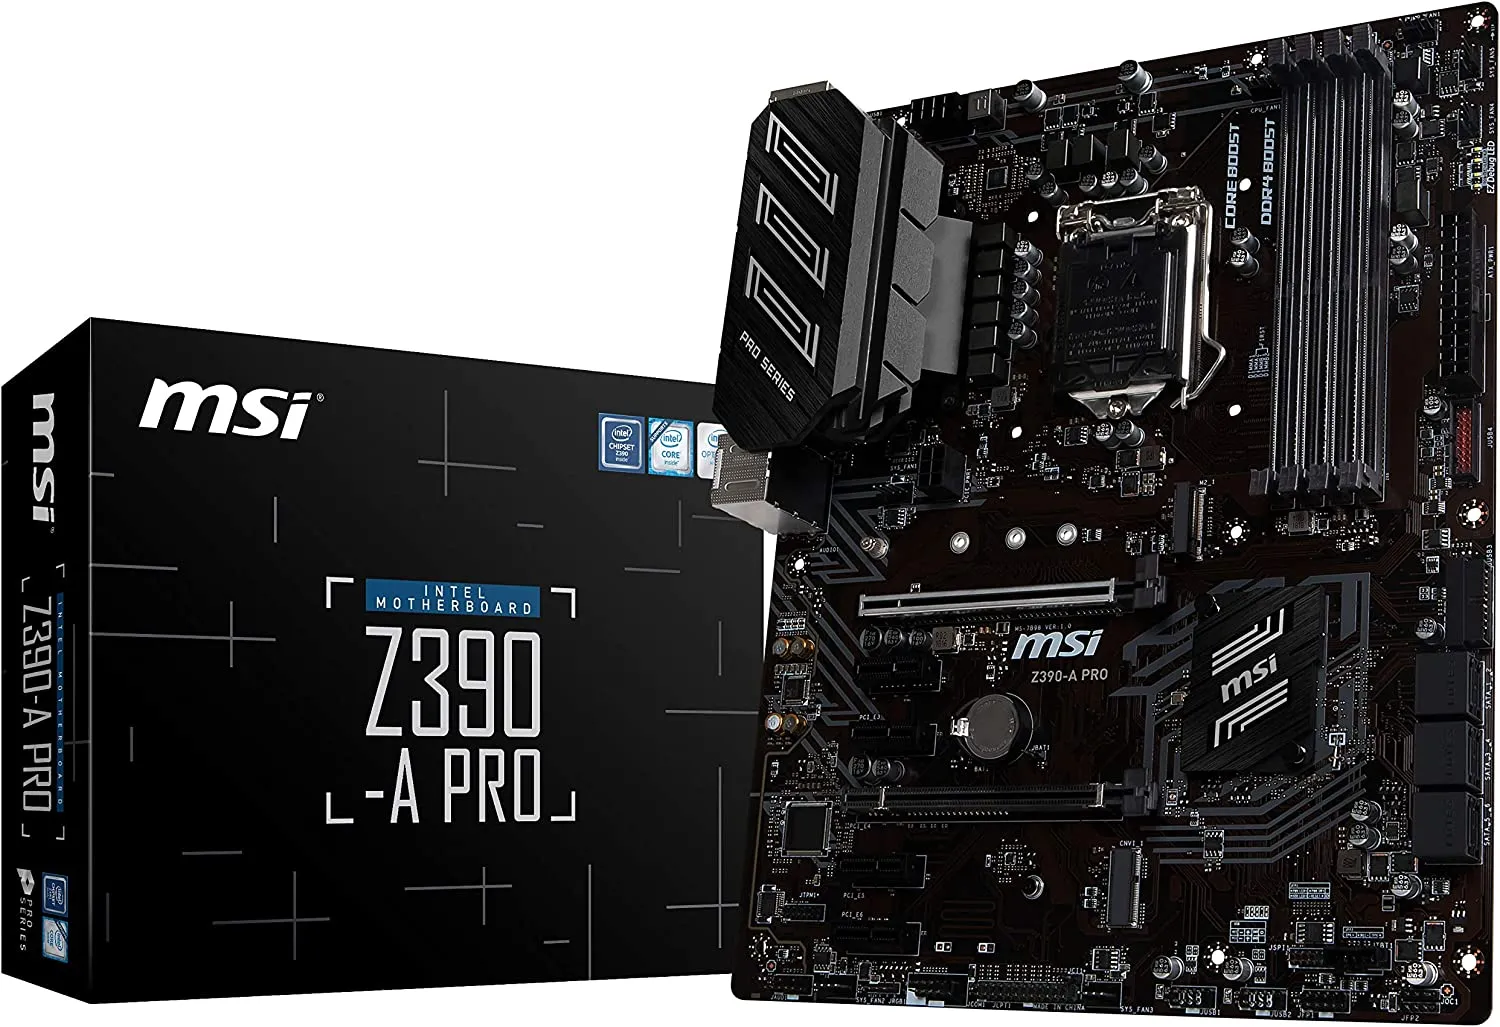 MSI Z390-A PRO ATX Z390 Gaming Motherboard